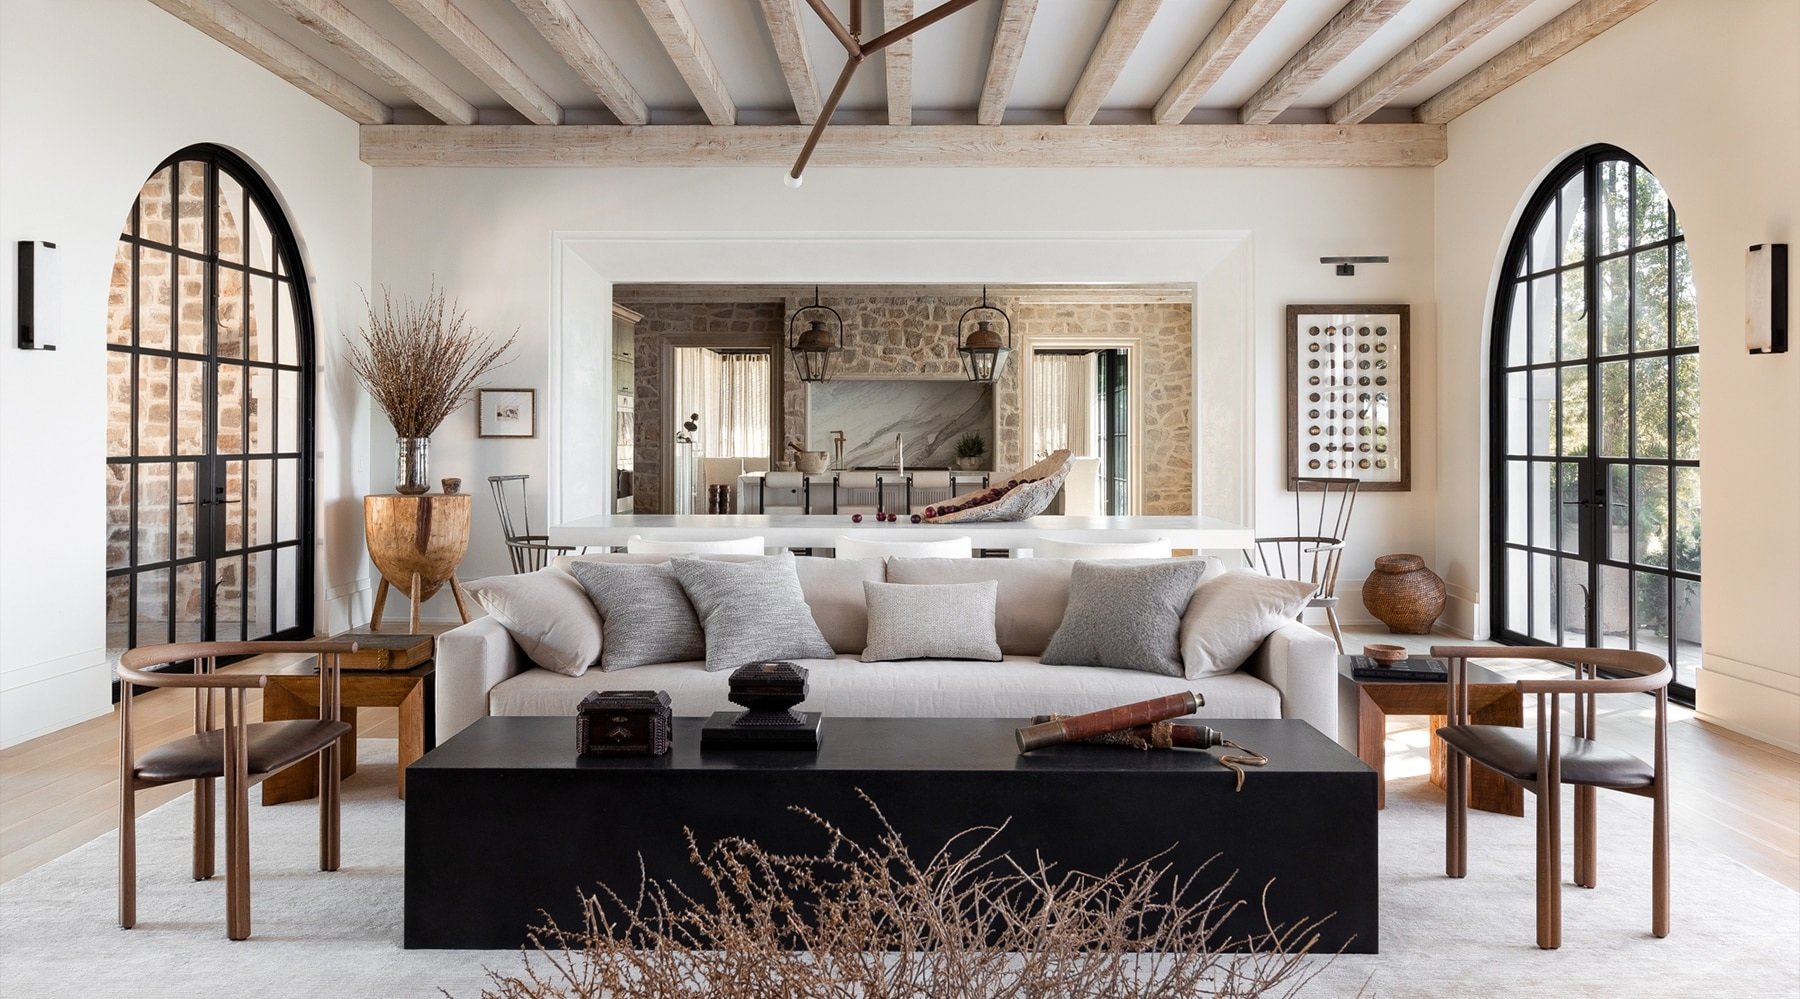 luxury modern mediterranean interior design; living room with exposed wood beams